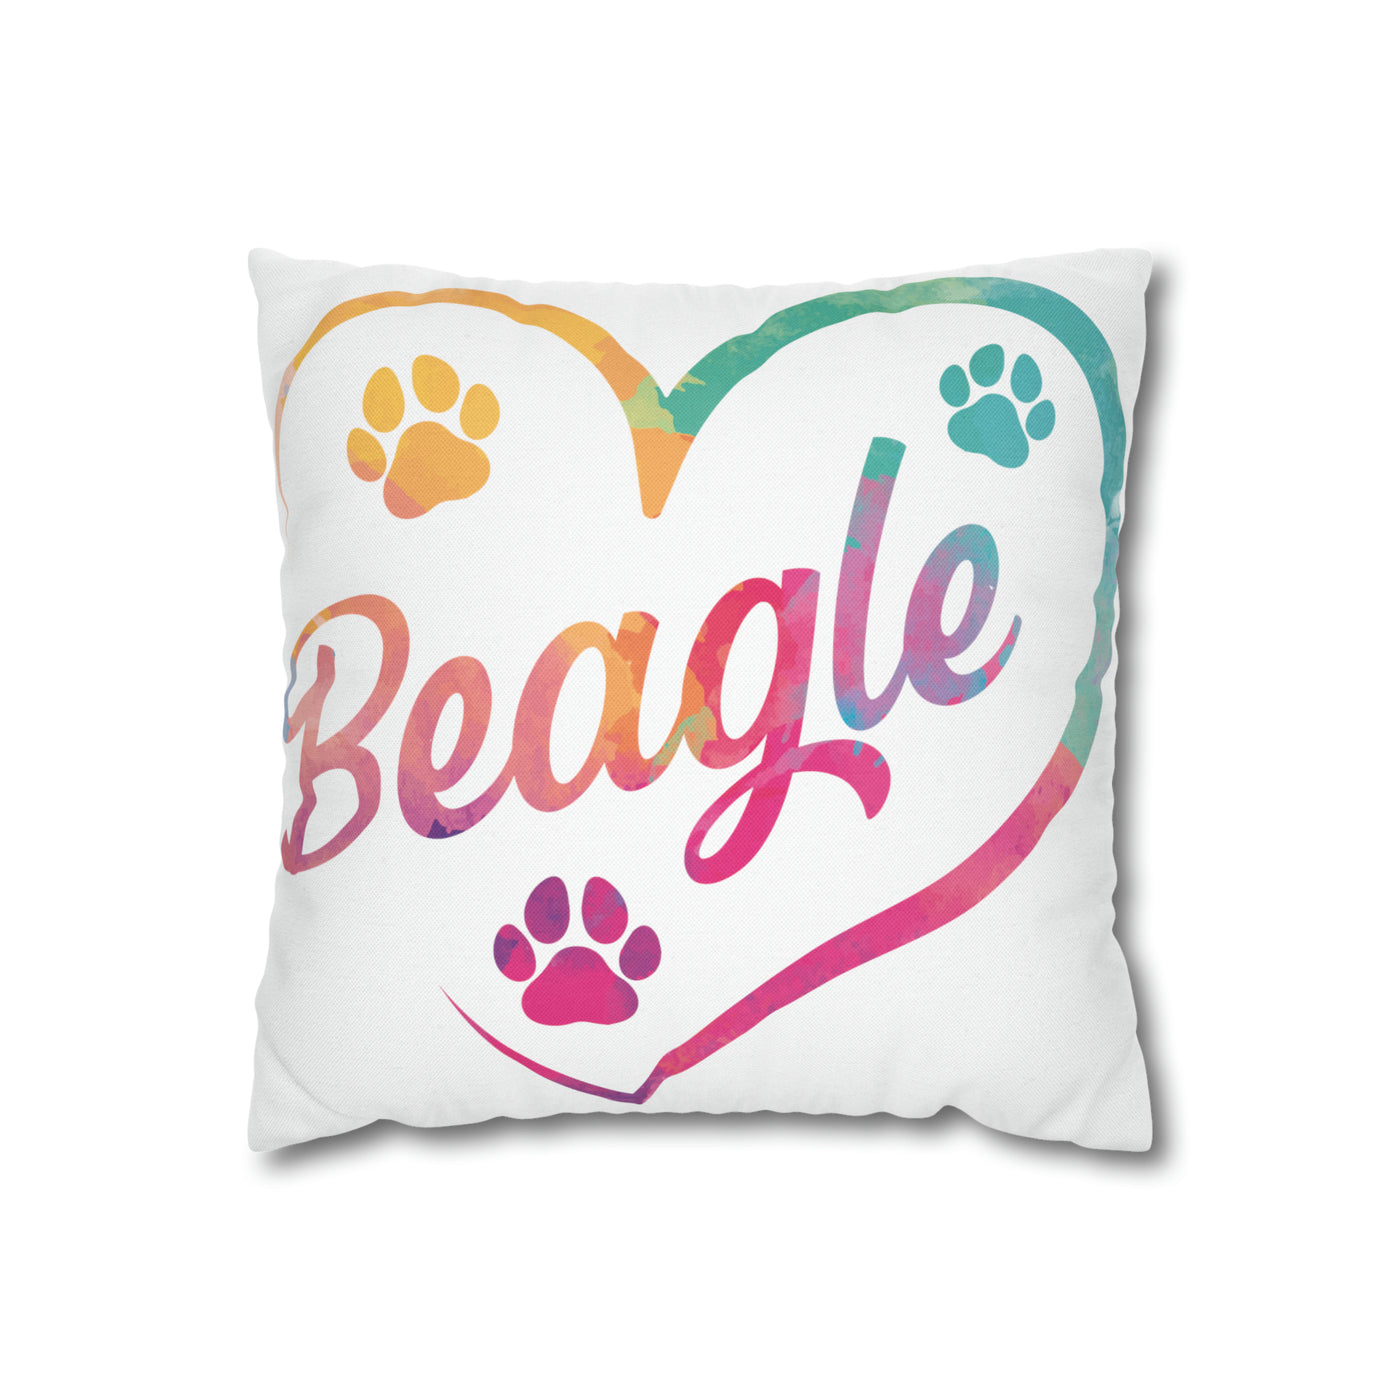 Heart Beagle Square Pillow Case